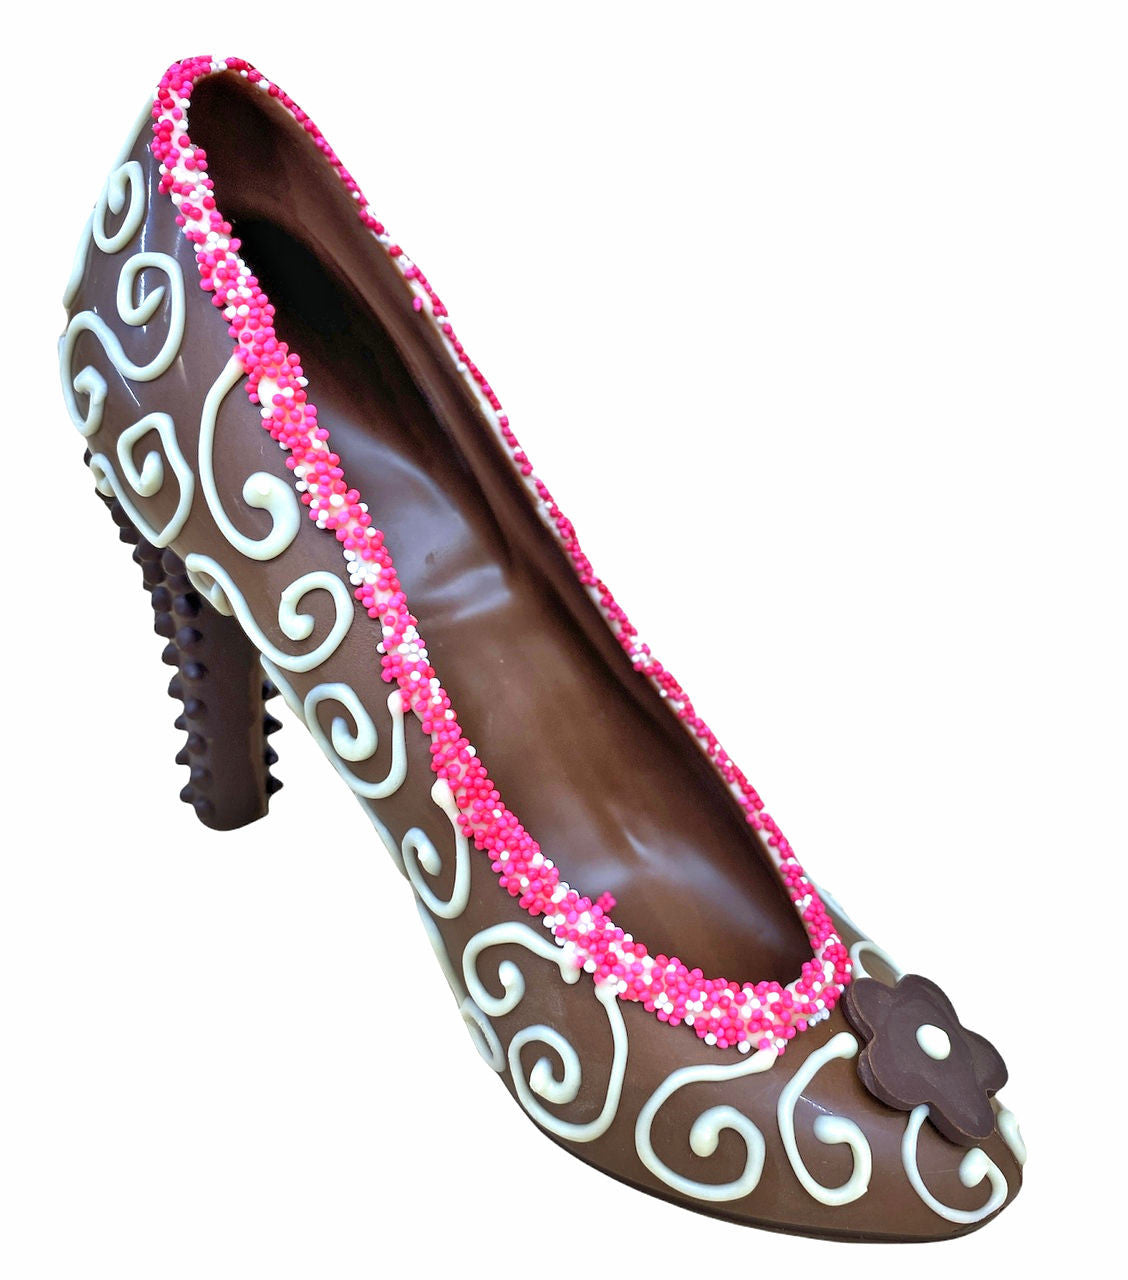 Chocolate high heel shoe